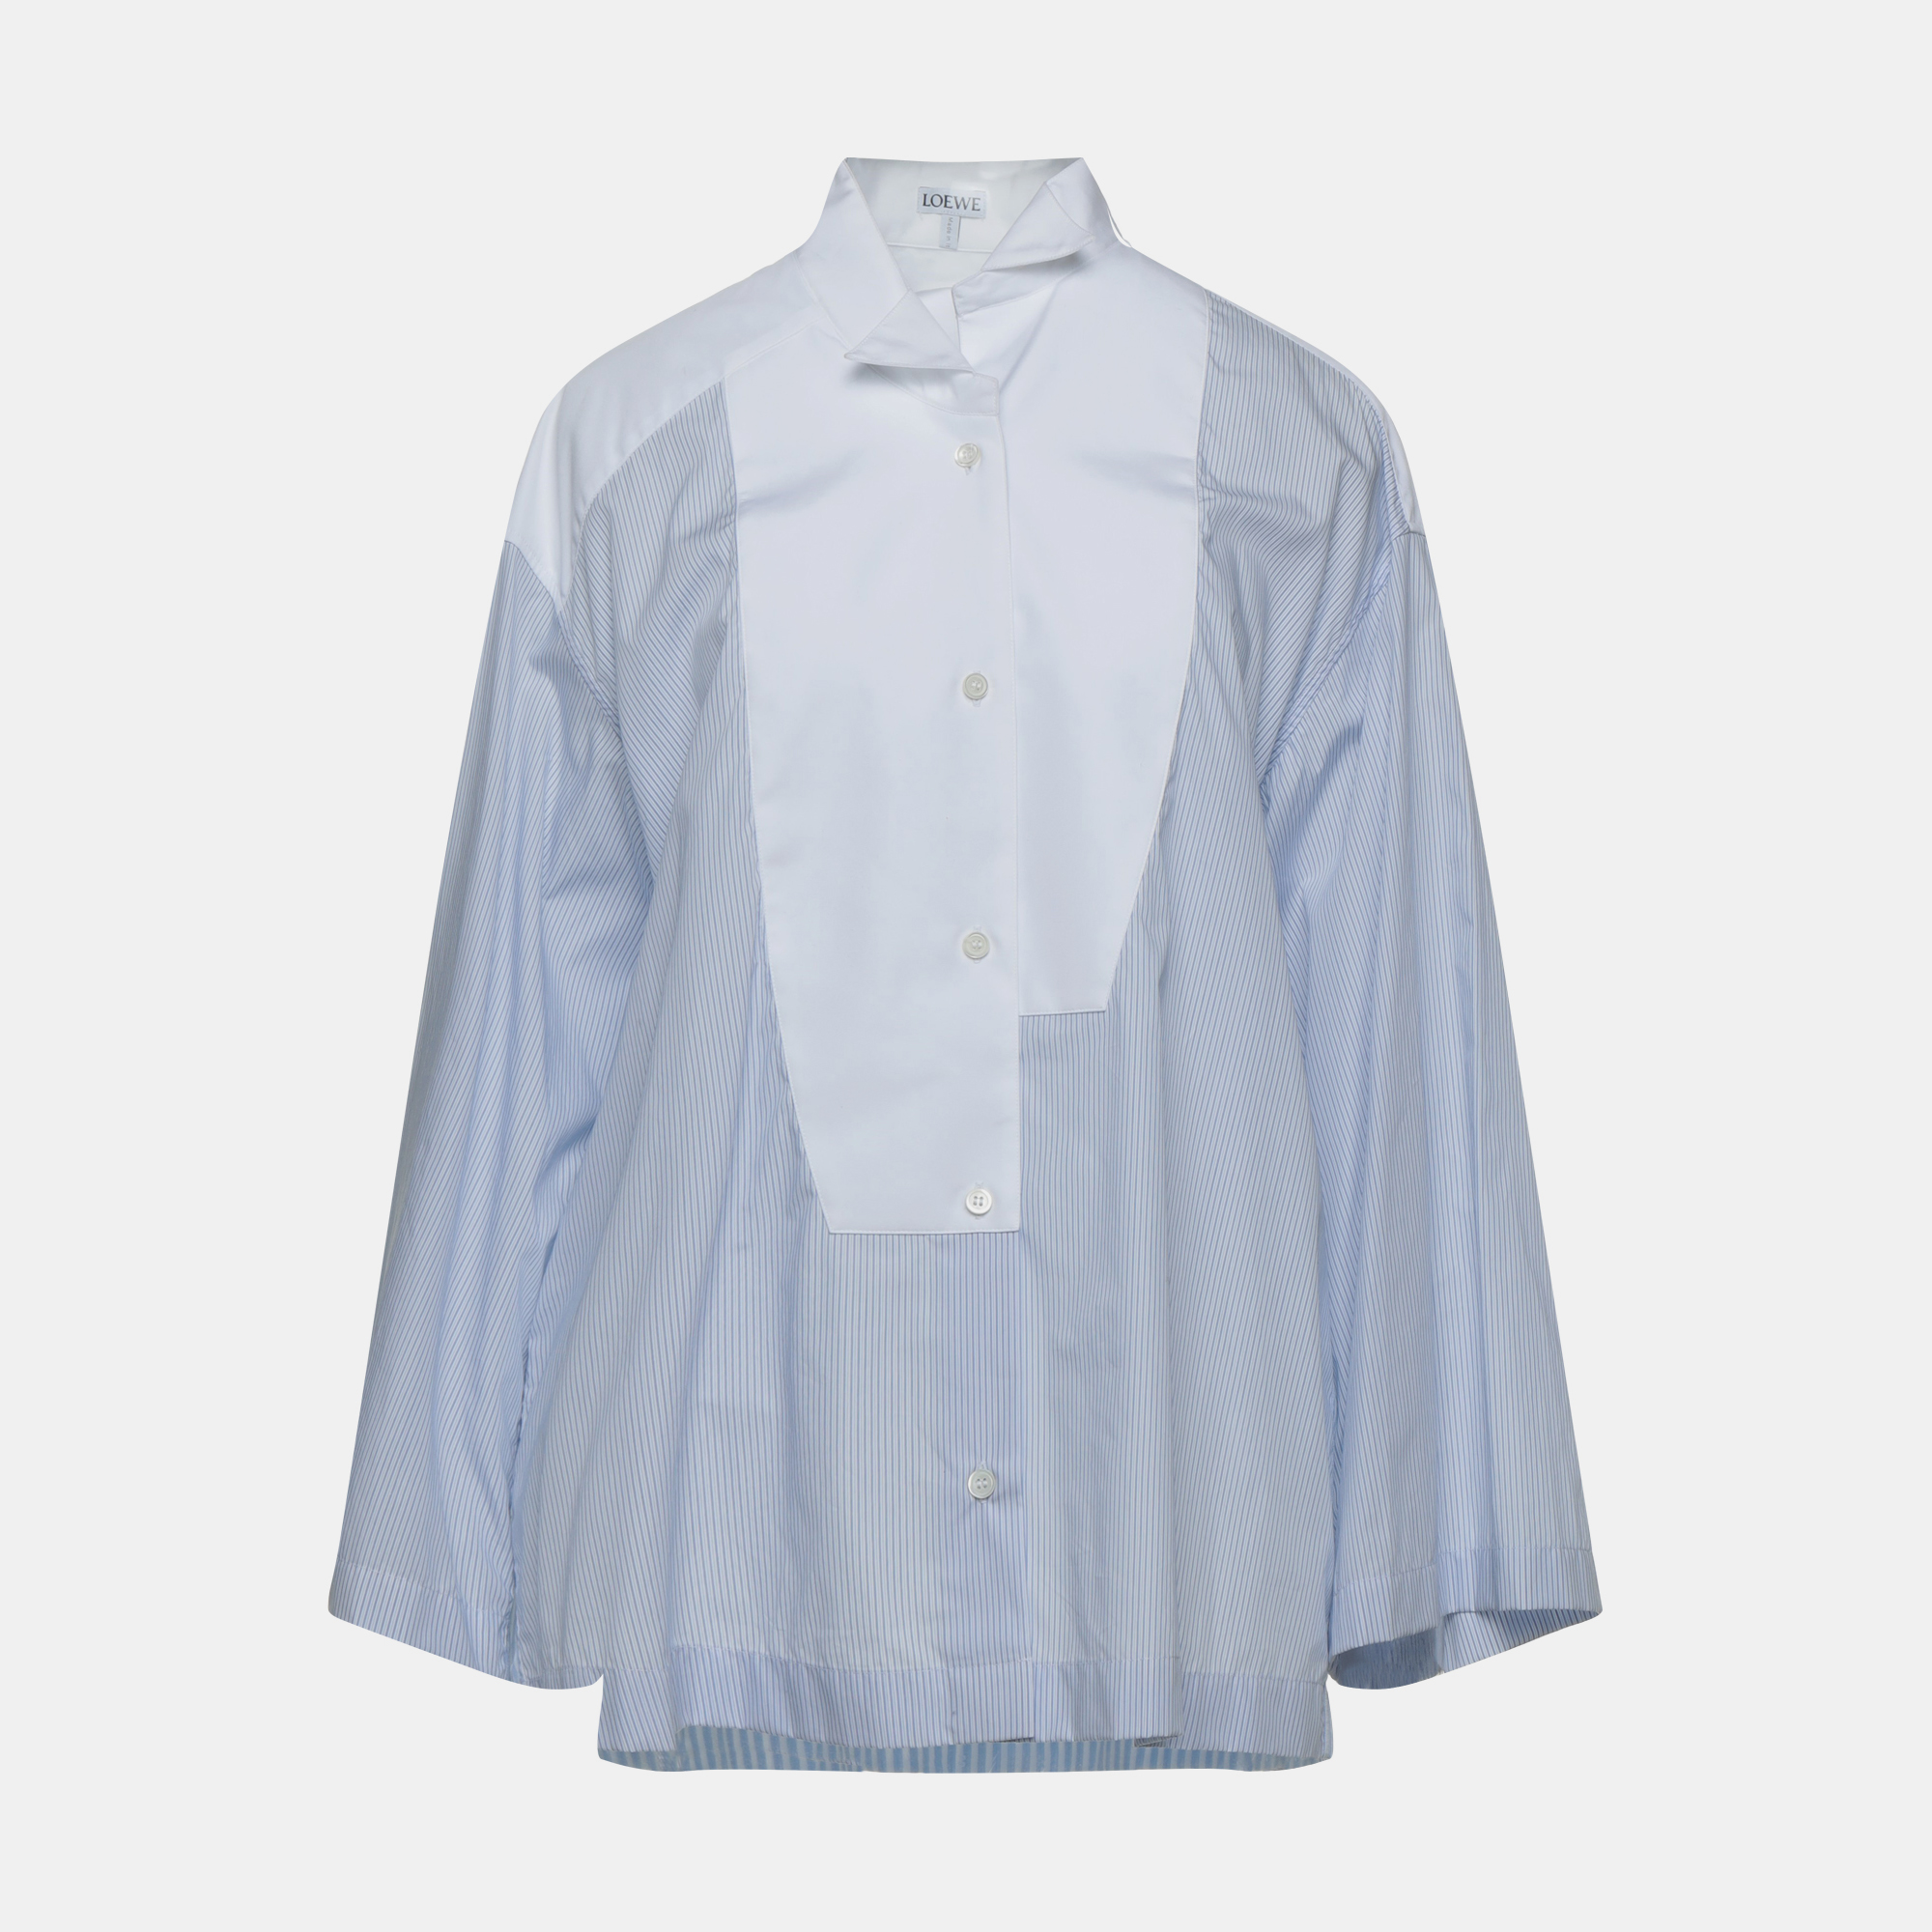 Loewe cotton shirts xs